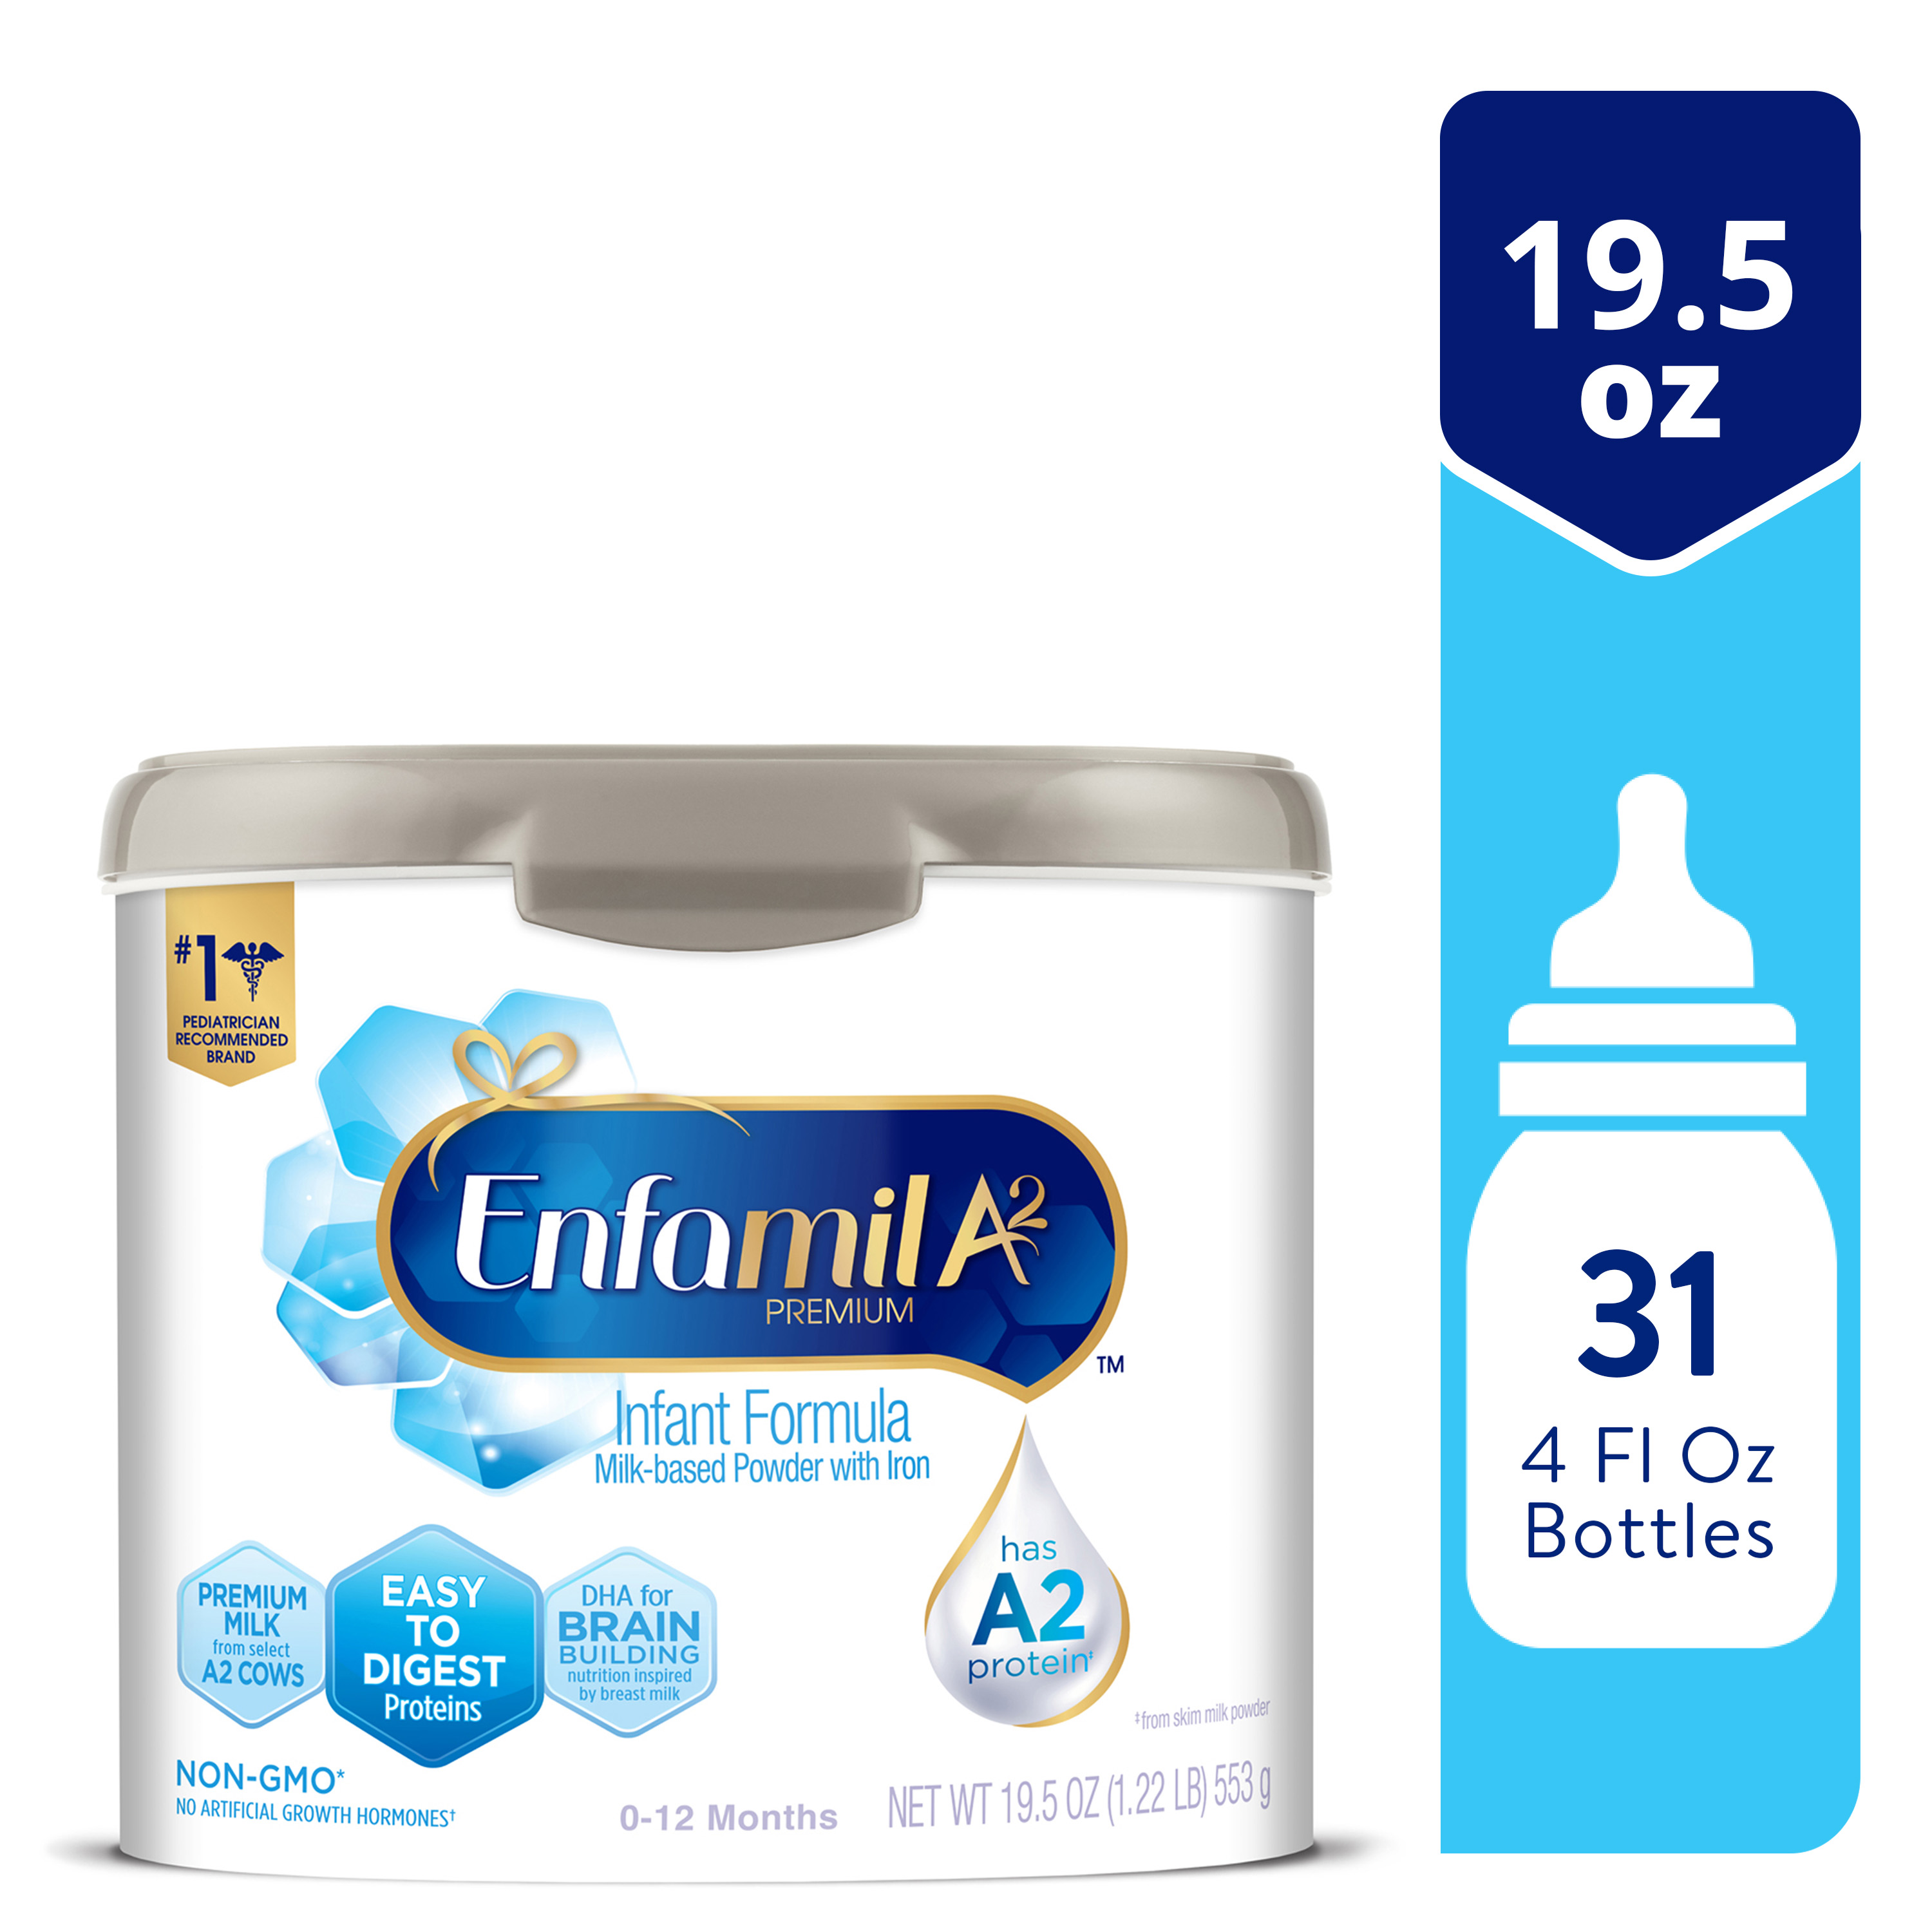 Enfamil A2 Premium Infant Formula, Milk-based Powder with Iron, 19.5 oz - image 1 of 14